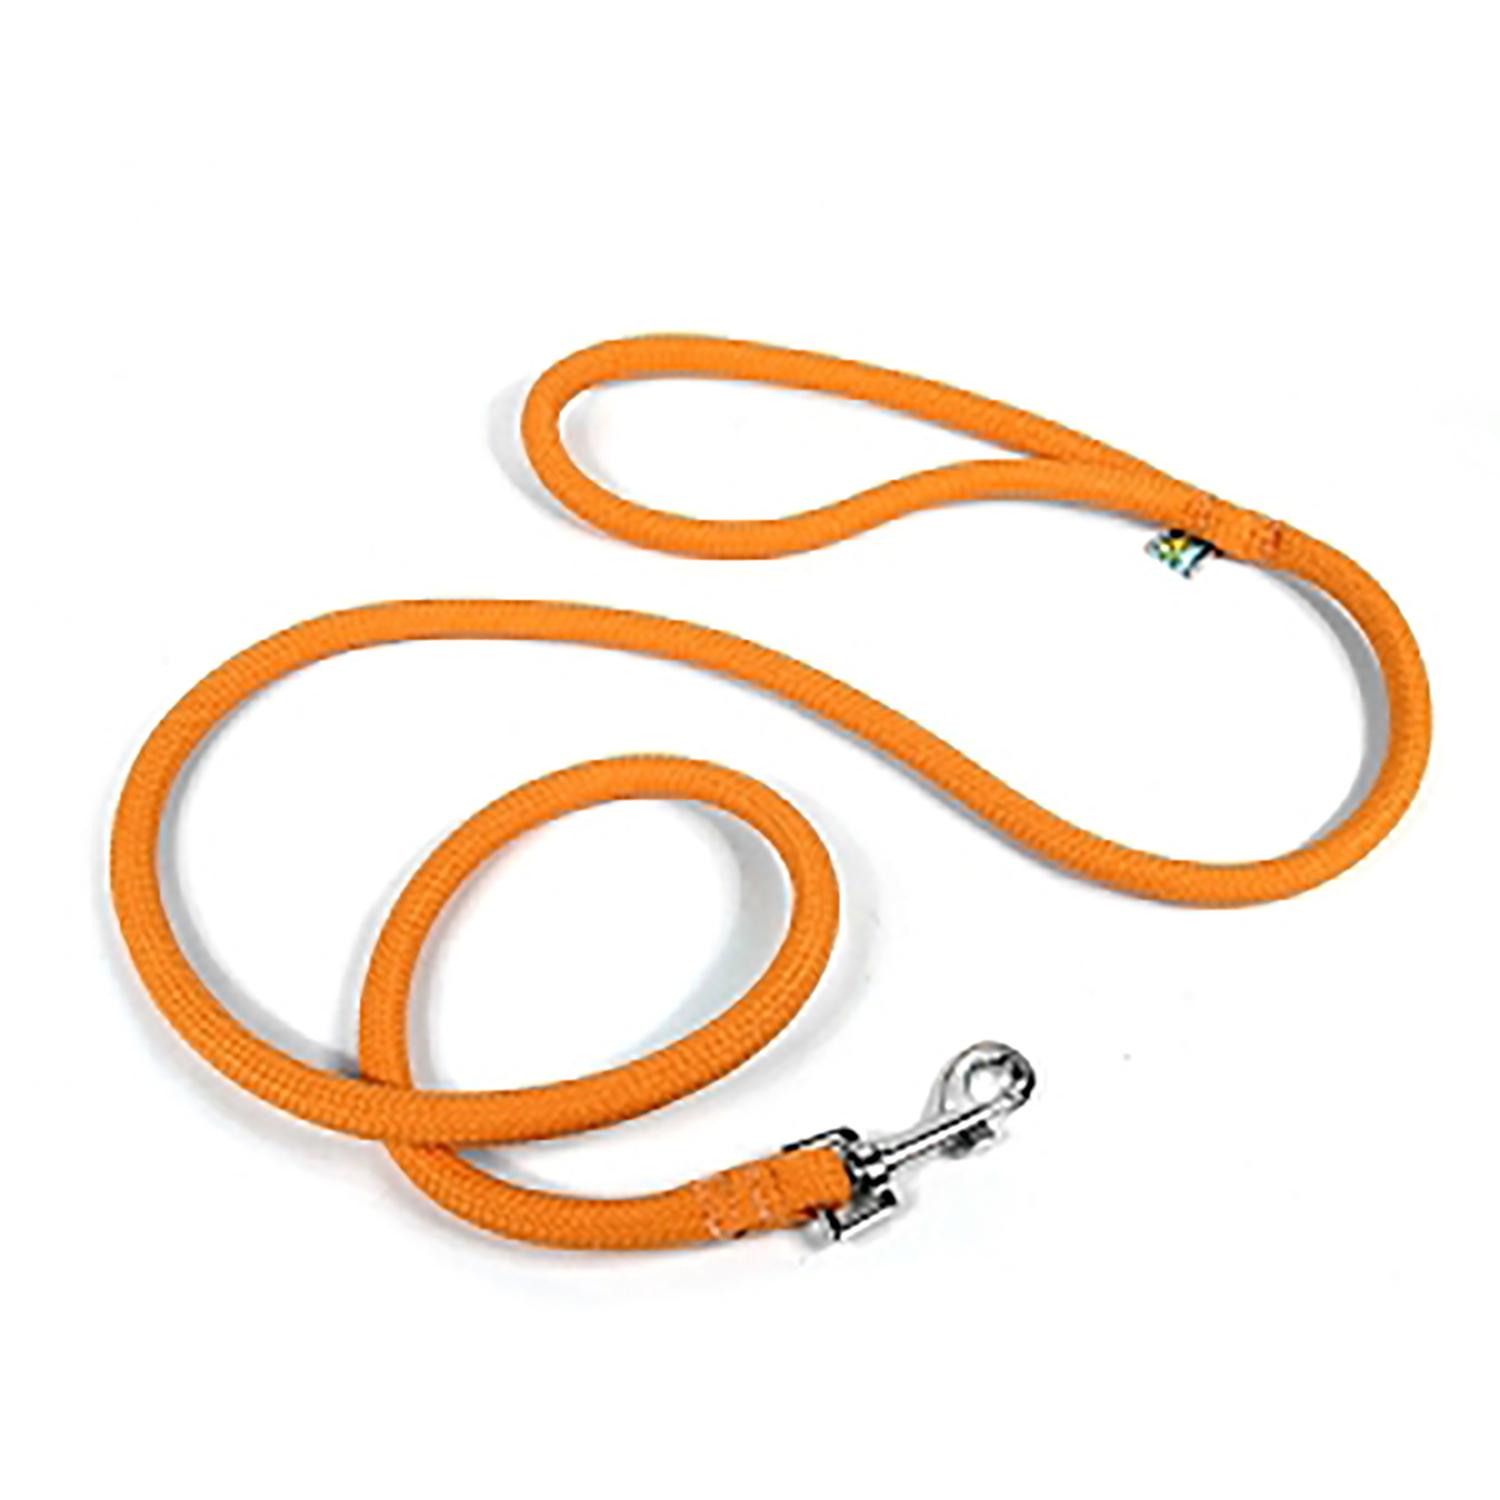 Braided Dog Leash by Yellow Dog - Orange